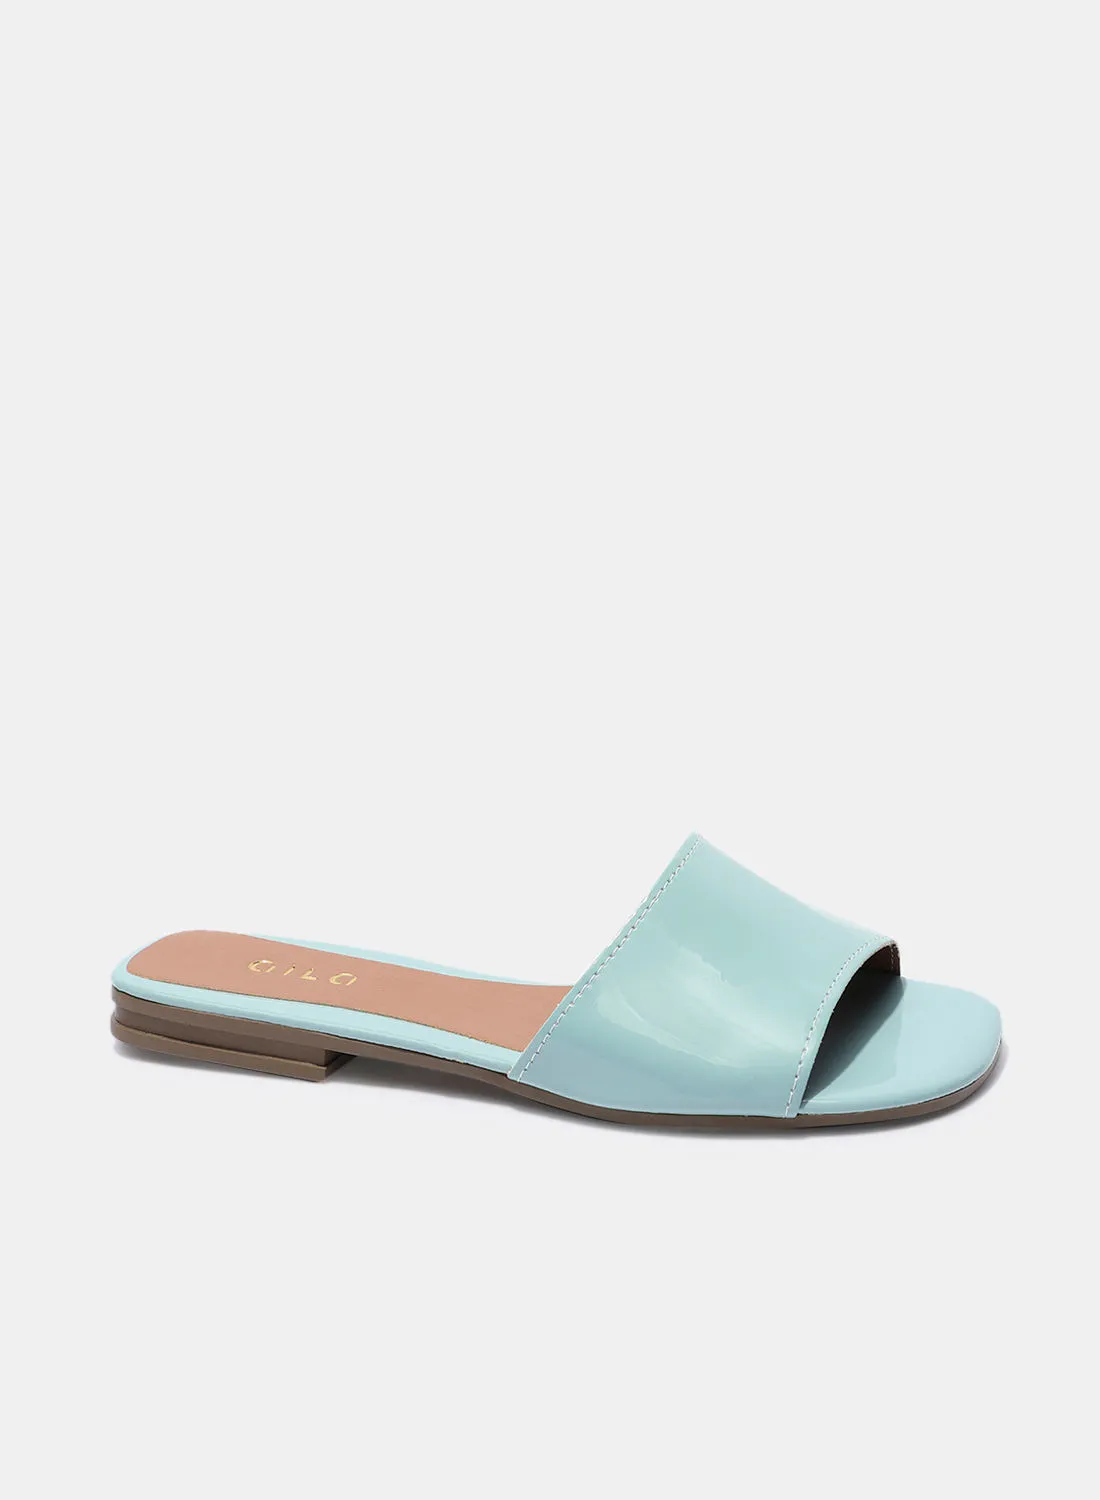 Aila Casual Plain Flat Sandals Blue